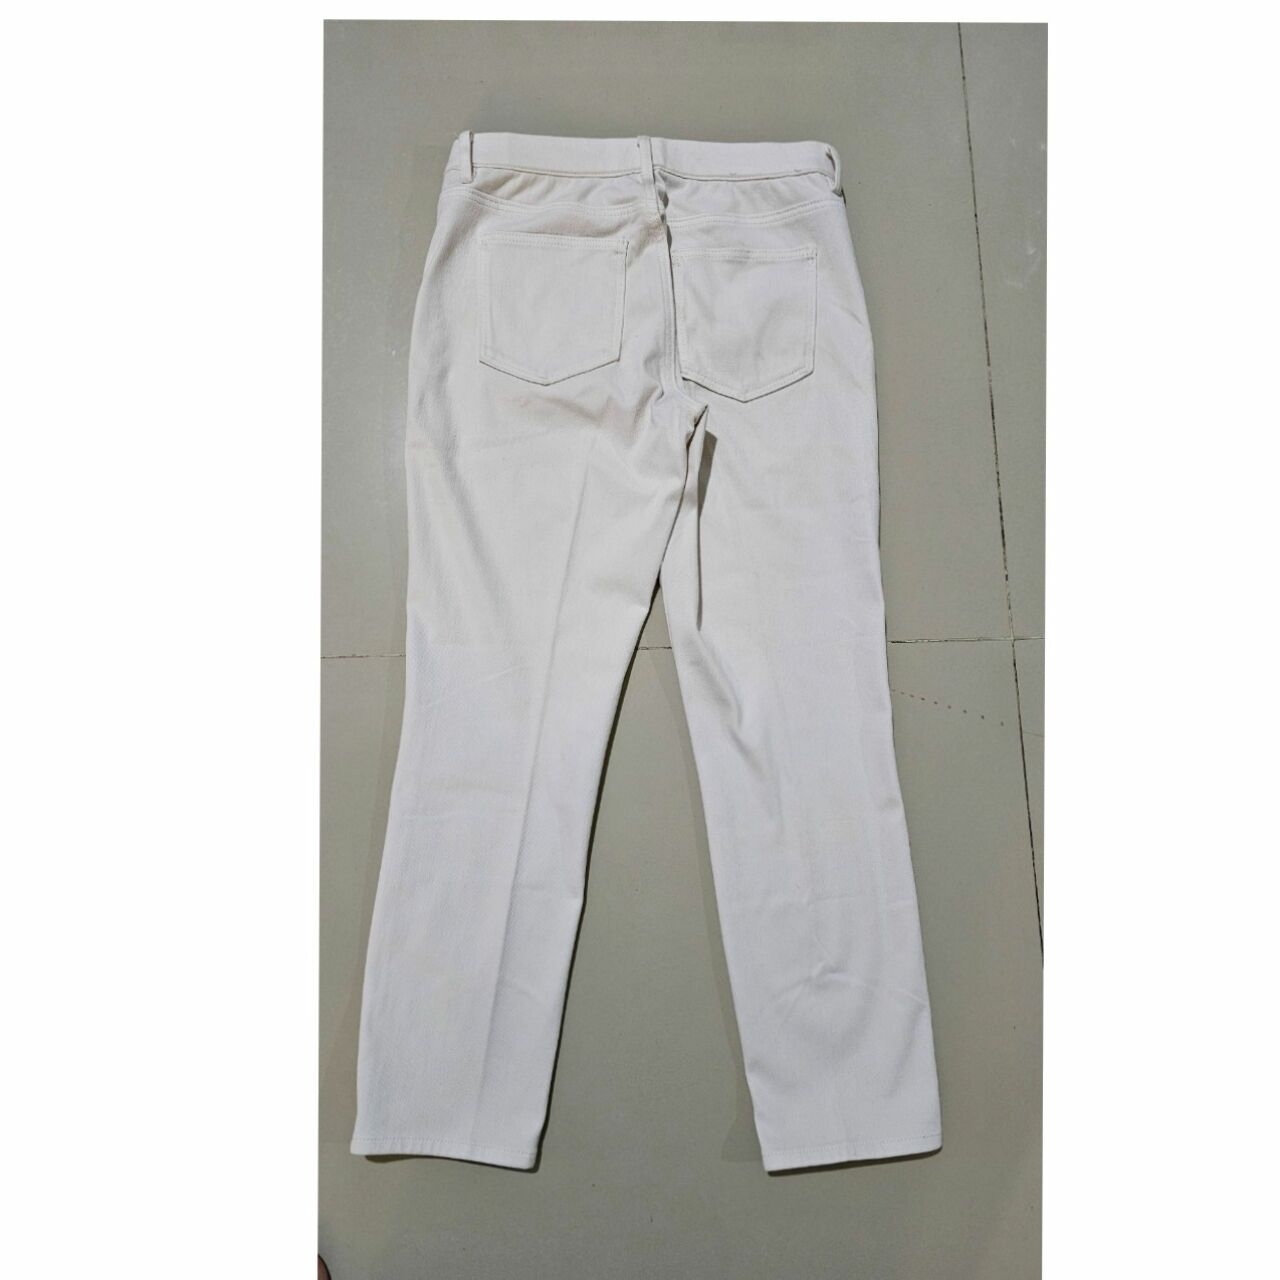 UNIQLO Broken White Long Pants